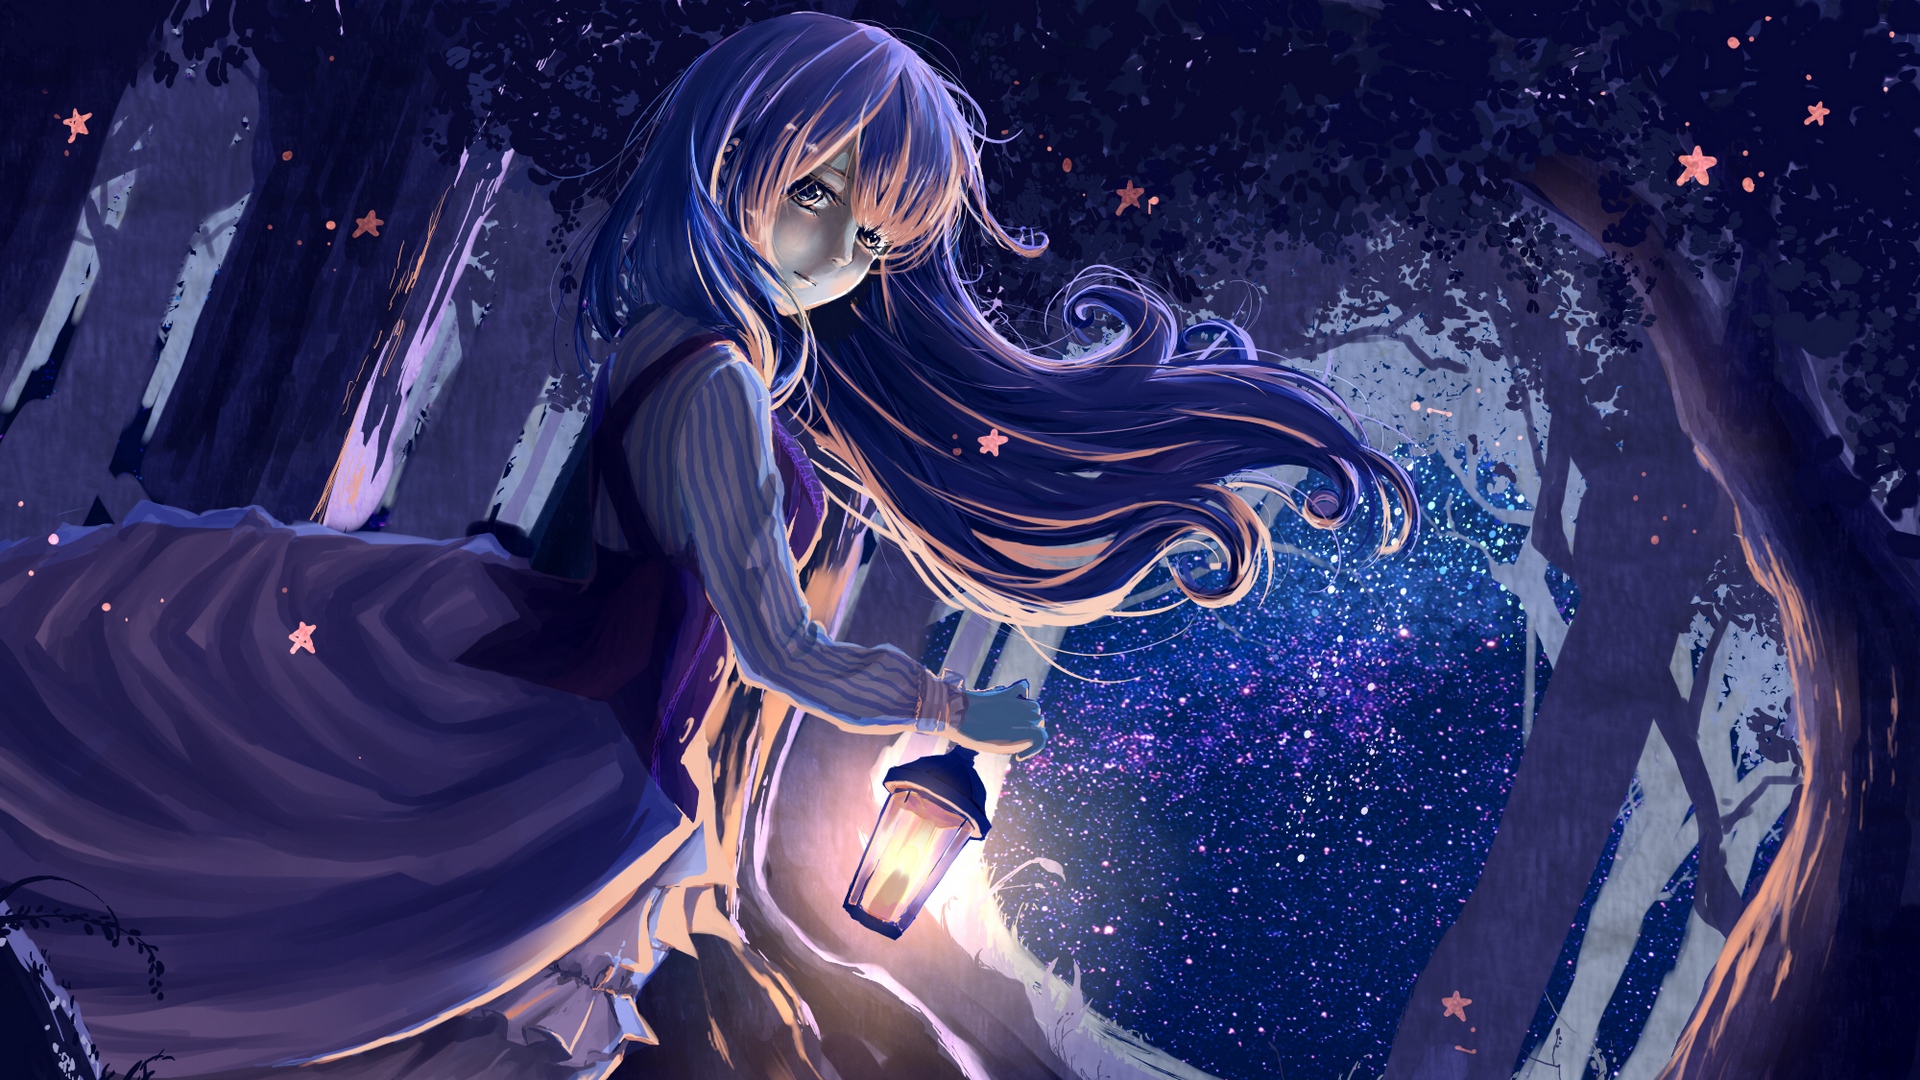 Wallpaper Girl Anime Lantern Forest Night Nightcore Bring Me